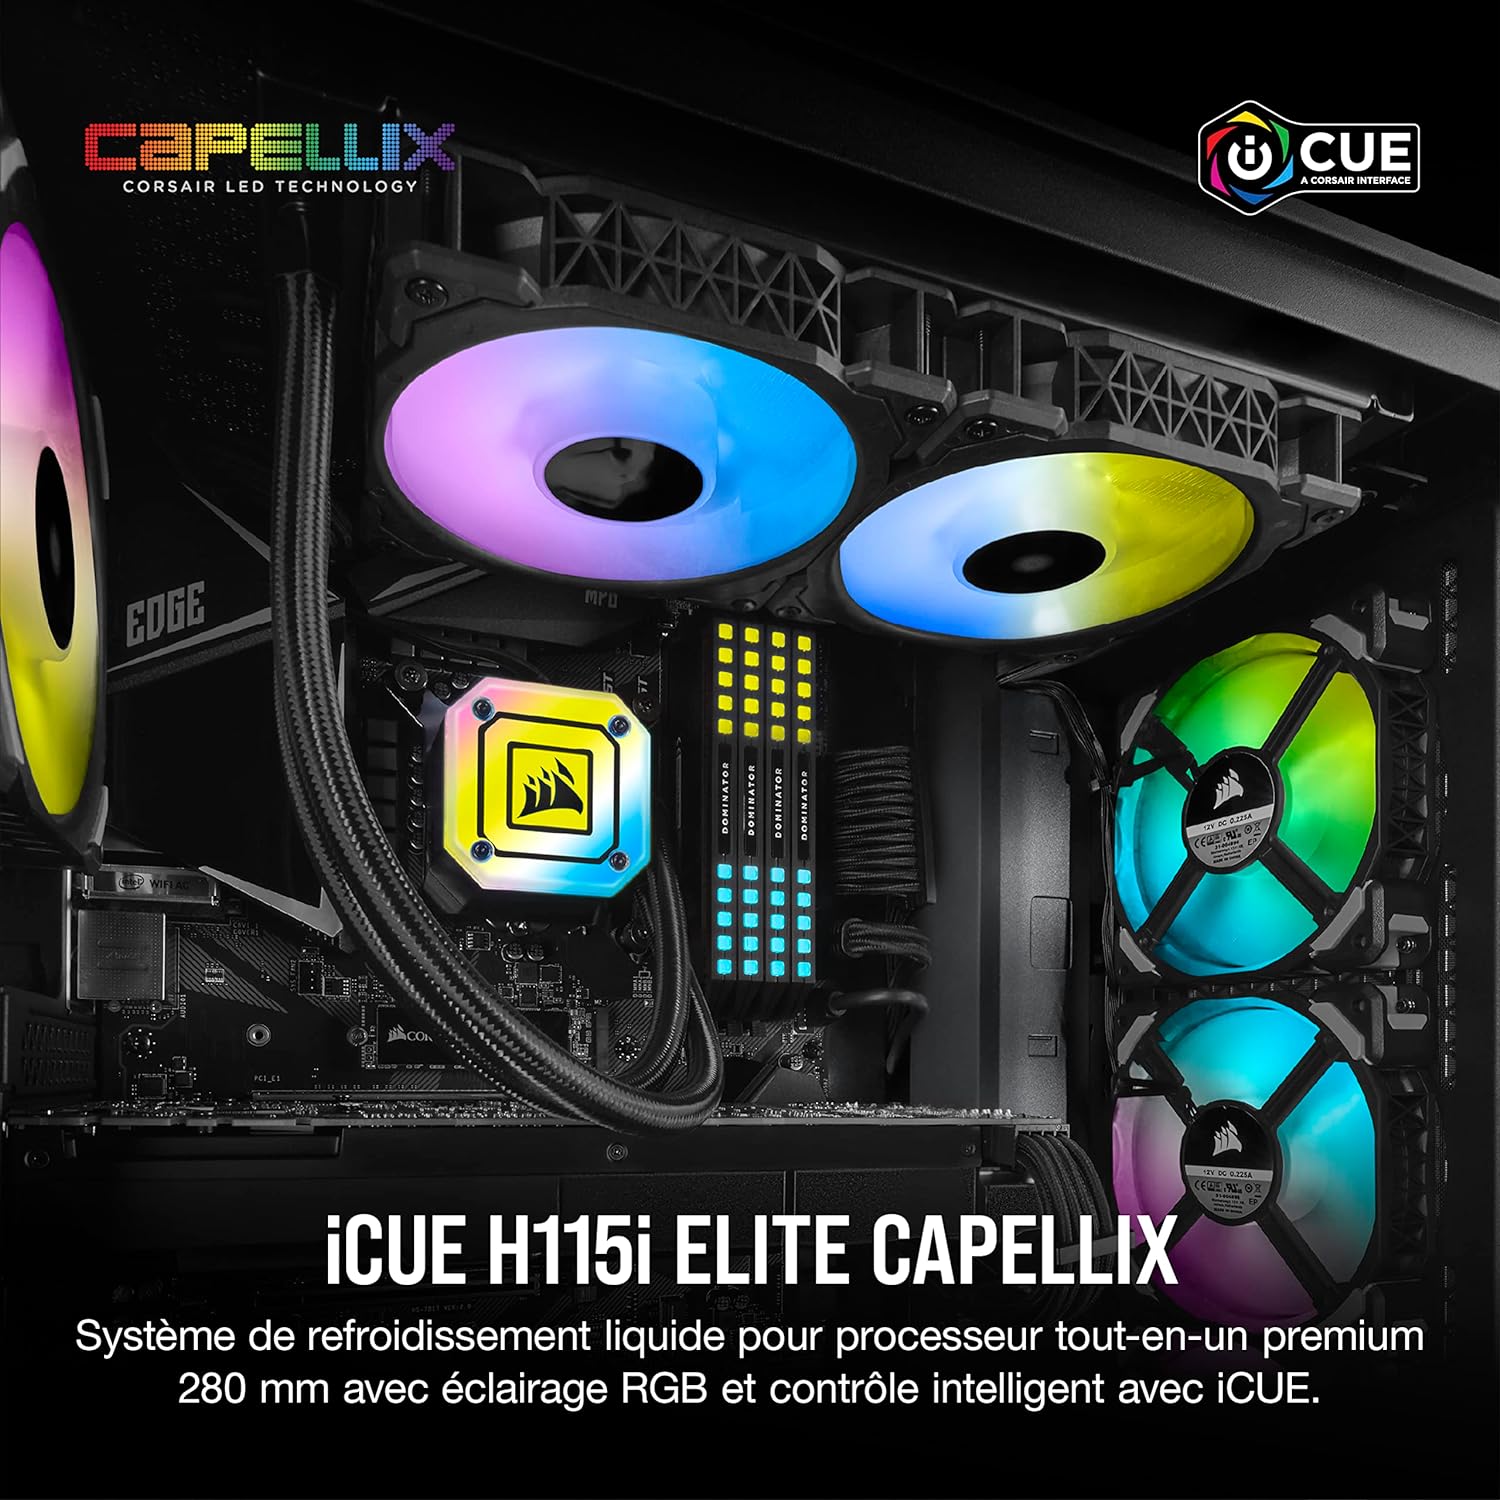 Corsair iCUE H115i Elite Capellix Liquid CPU Cooler - Smart RGB controller for precise fan speed and lighting control. 0840006618768